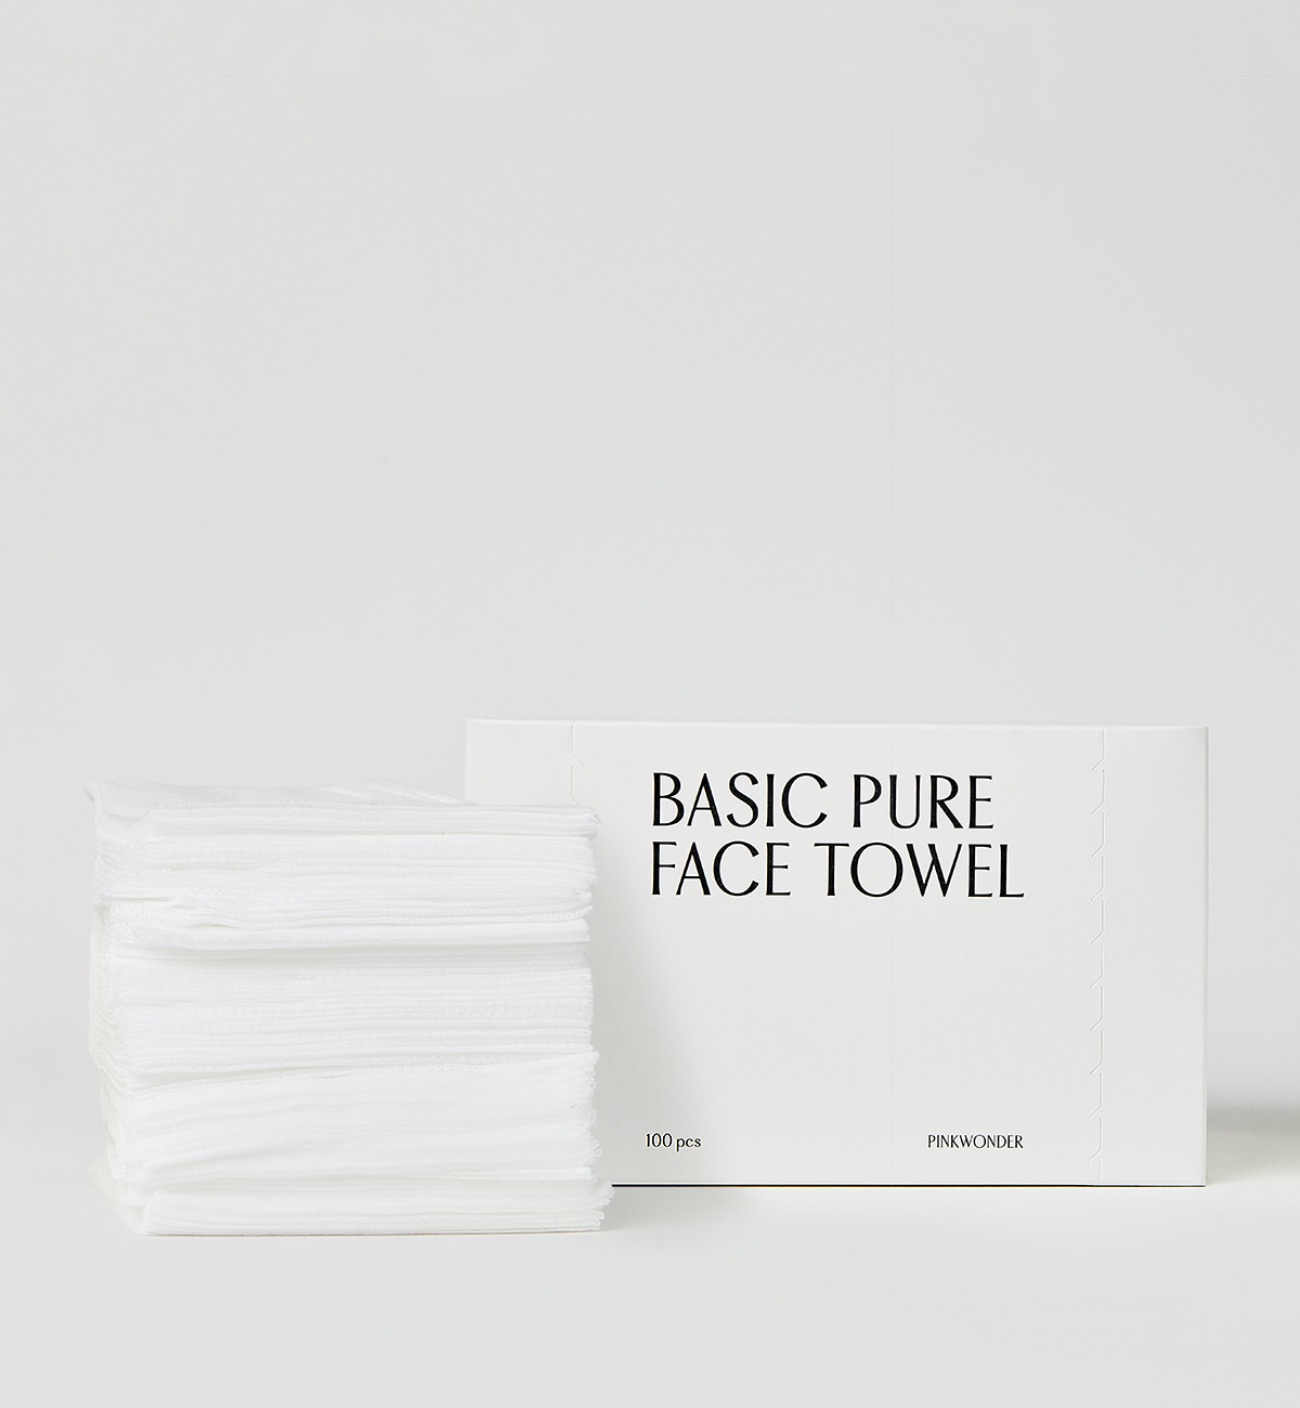 Basic Pure Face Towel